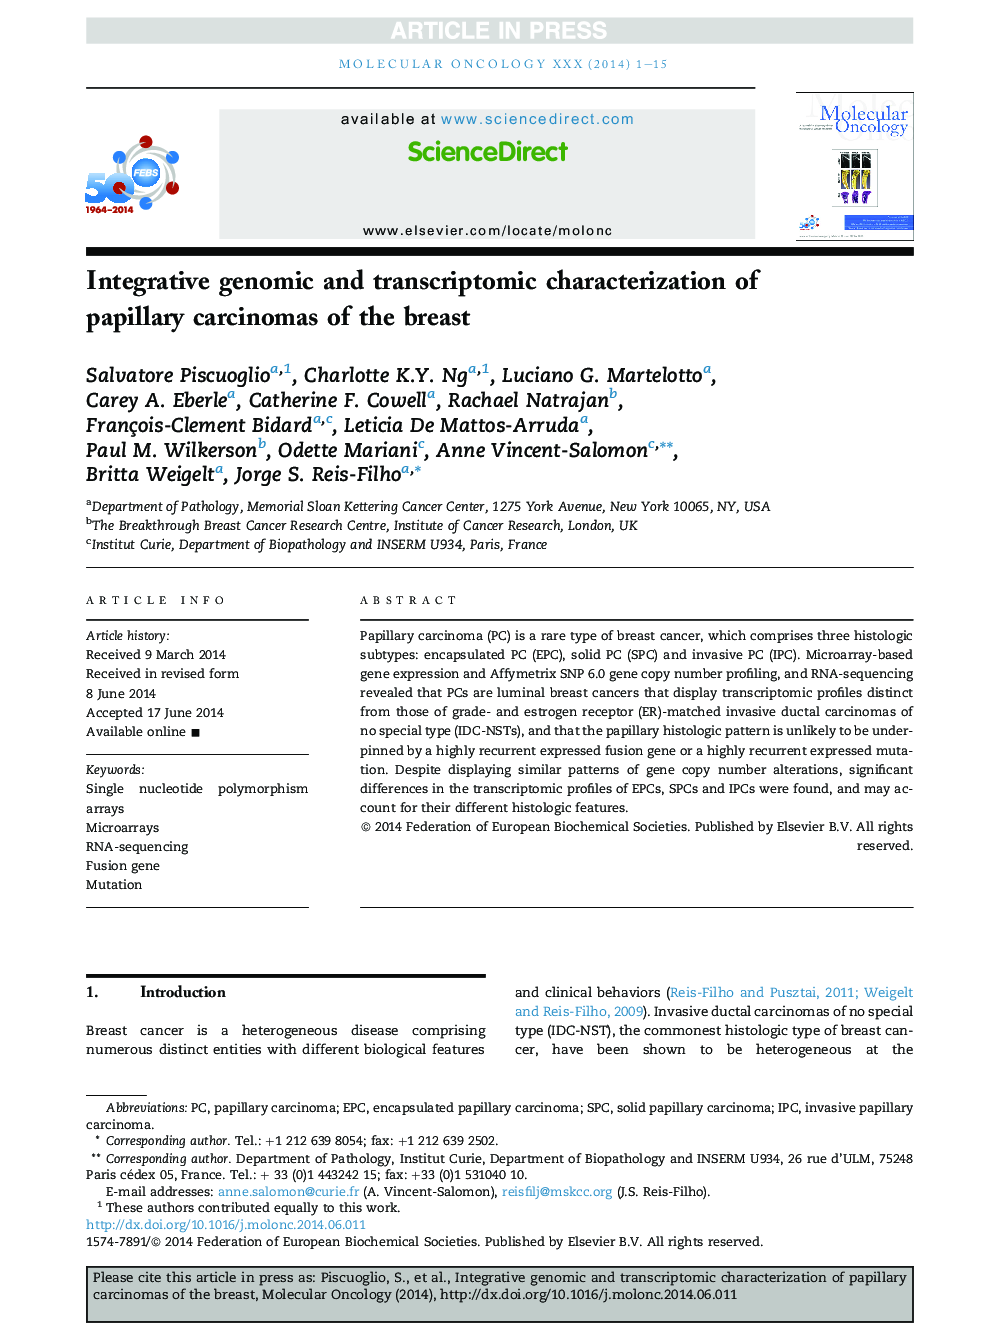 Integrative genomic and transcriptomic characterization of papillary carcinomas of the breast